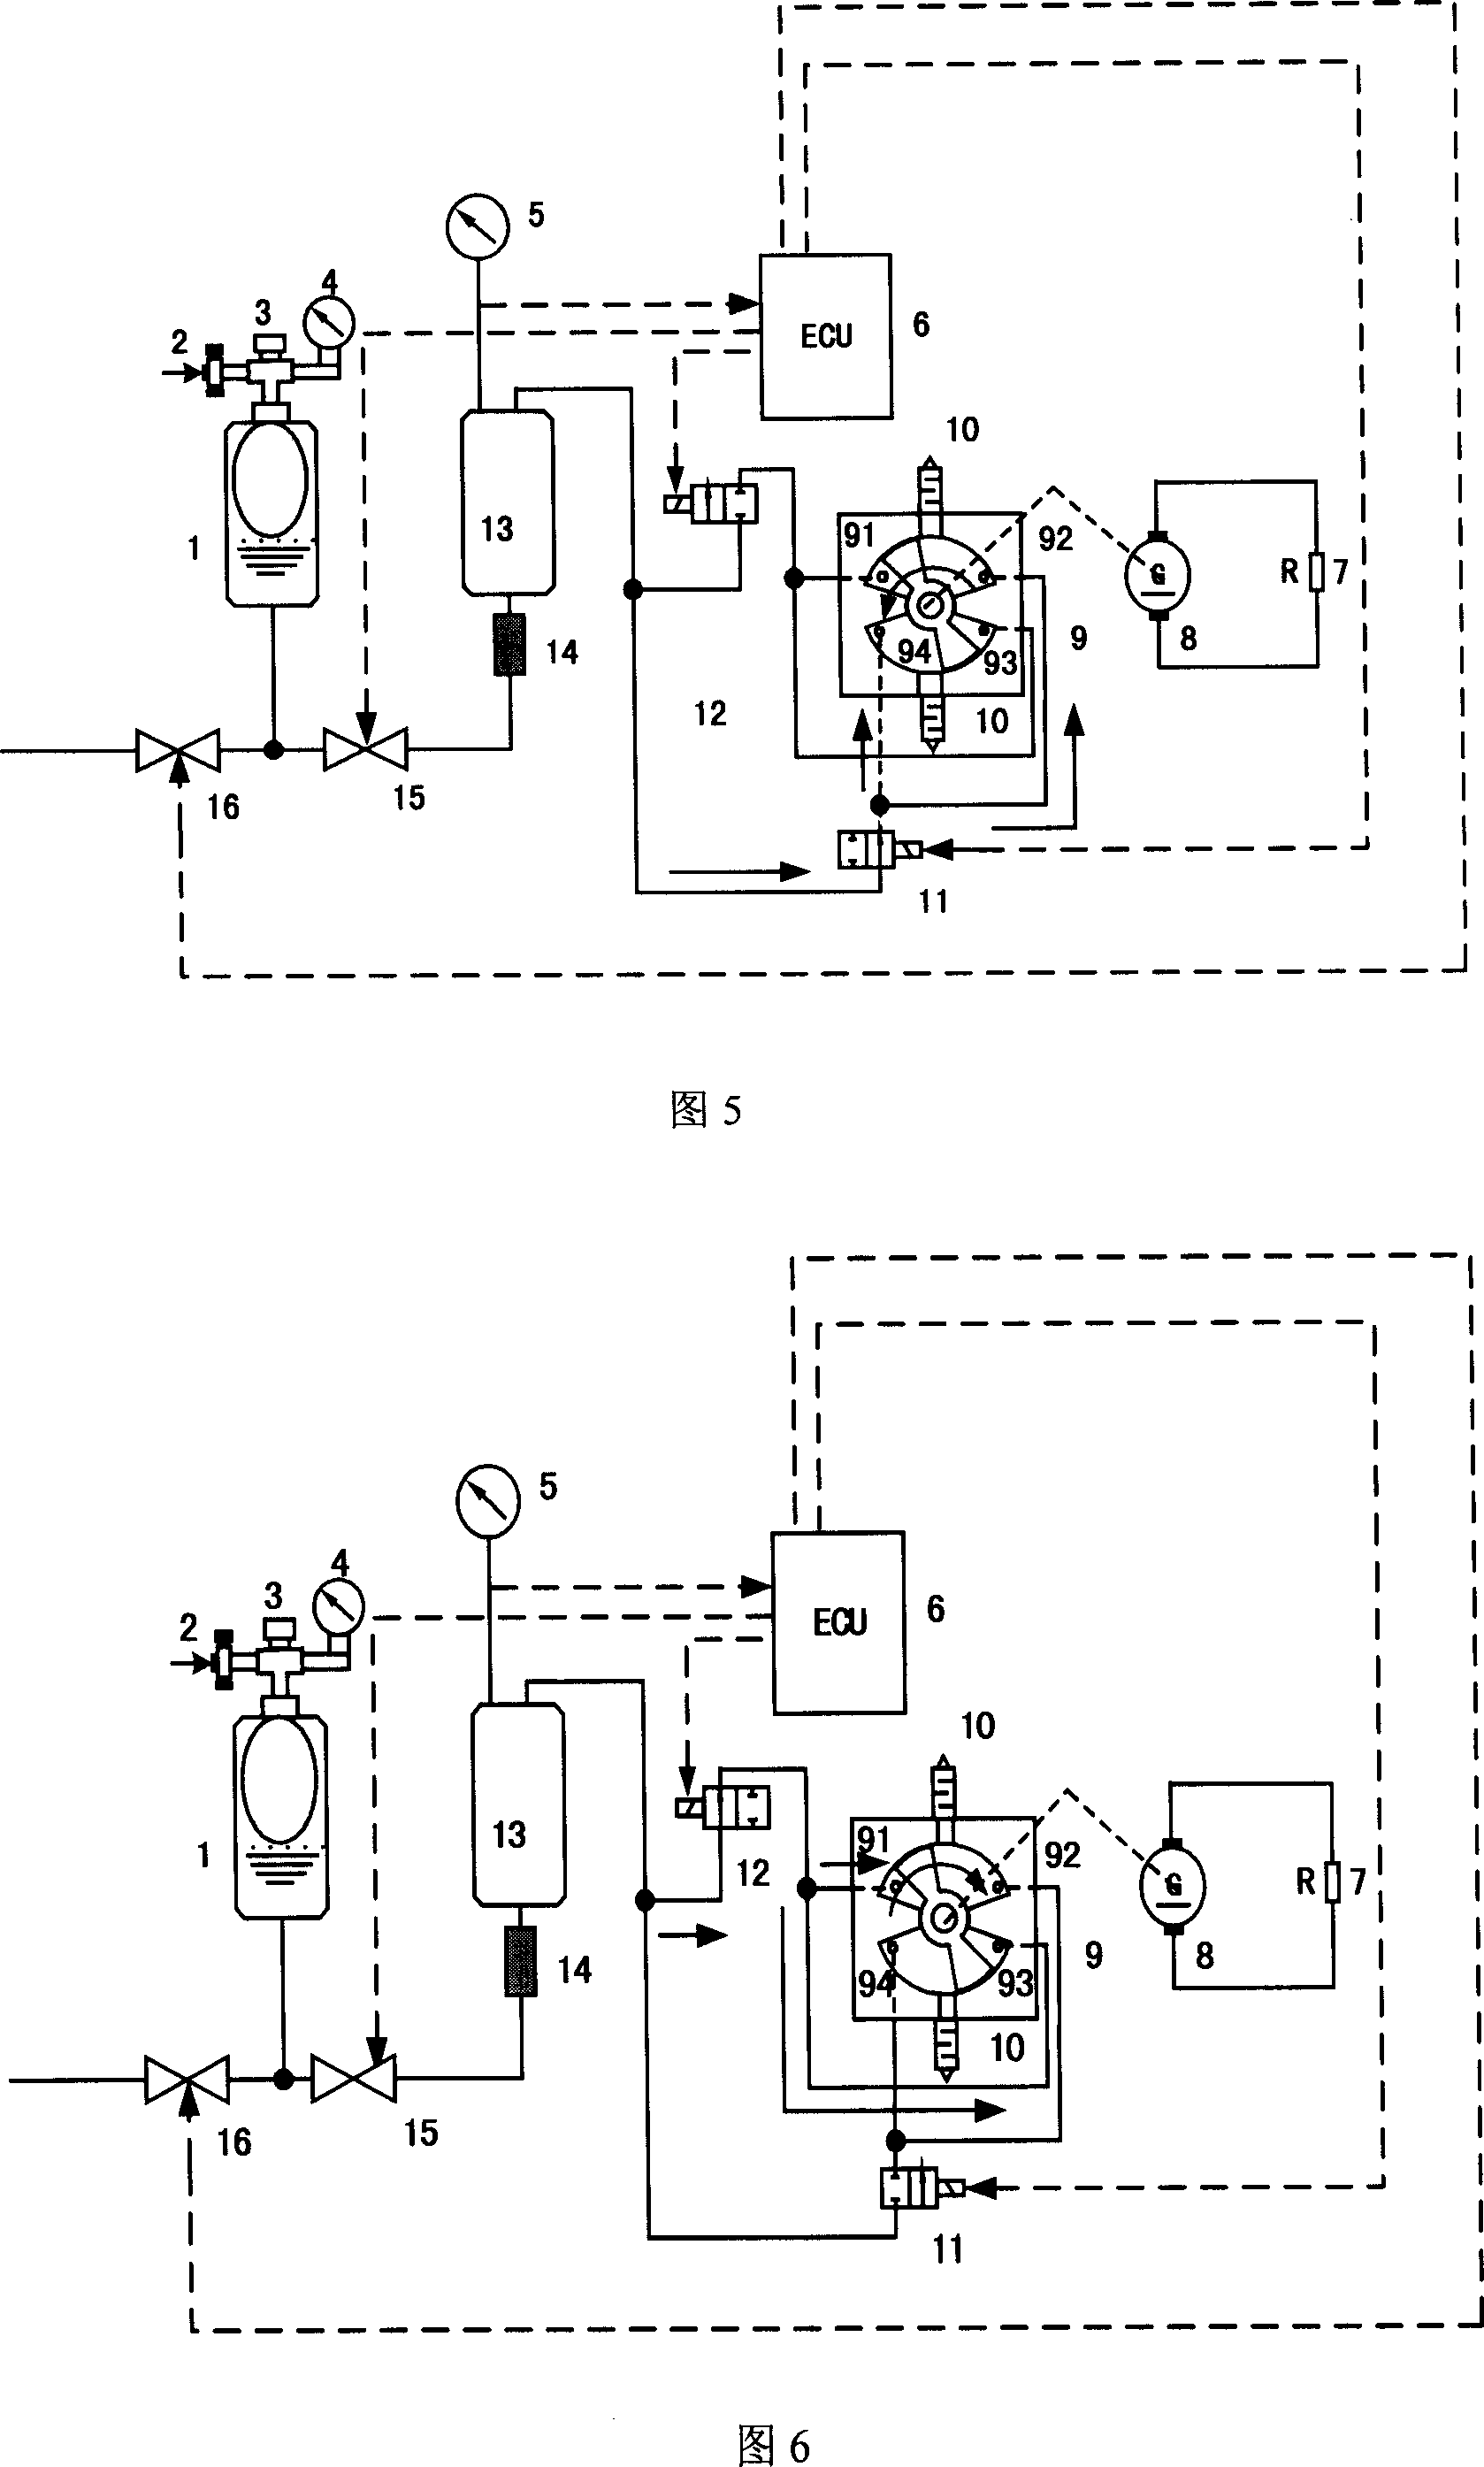 Pulse pendulum type monopropellant engine